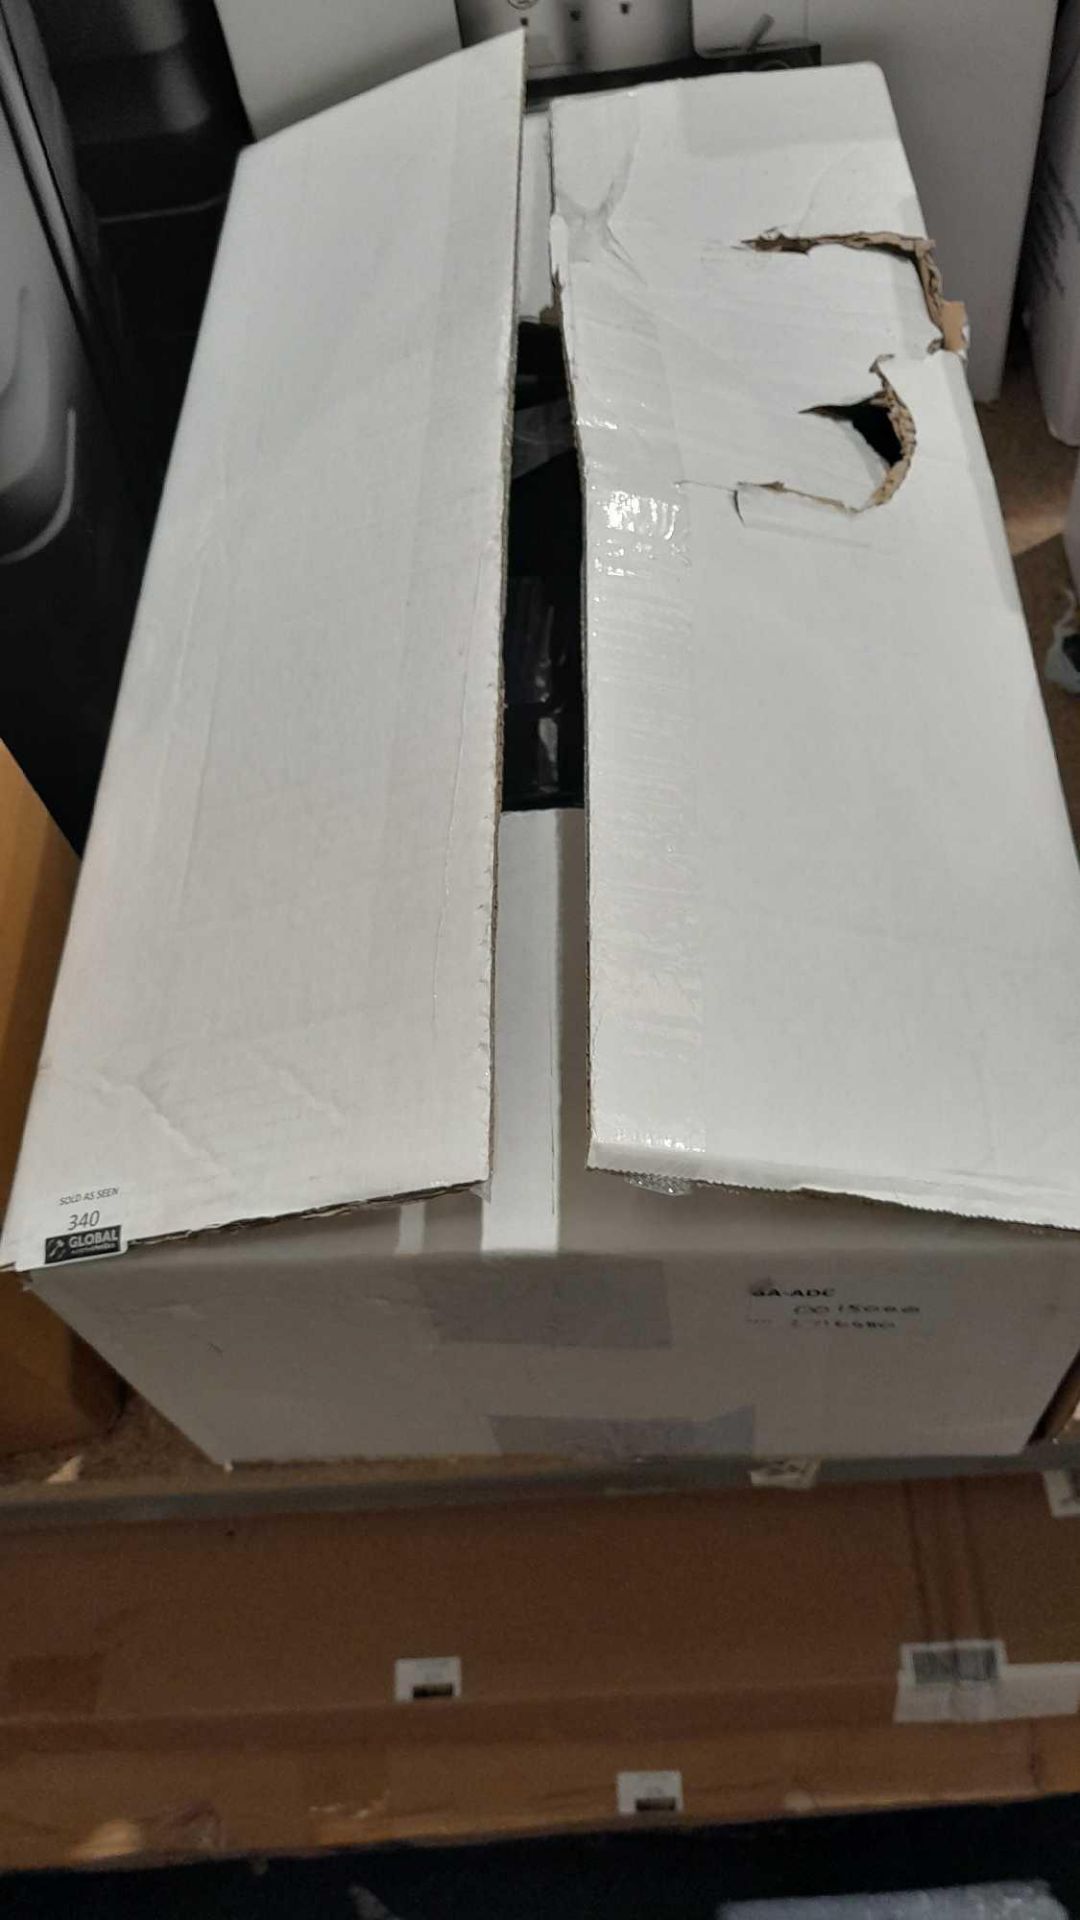 RRP £150 Boxed John Lewis Cordless Vacuum Cleaner. - Image 2 of 2